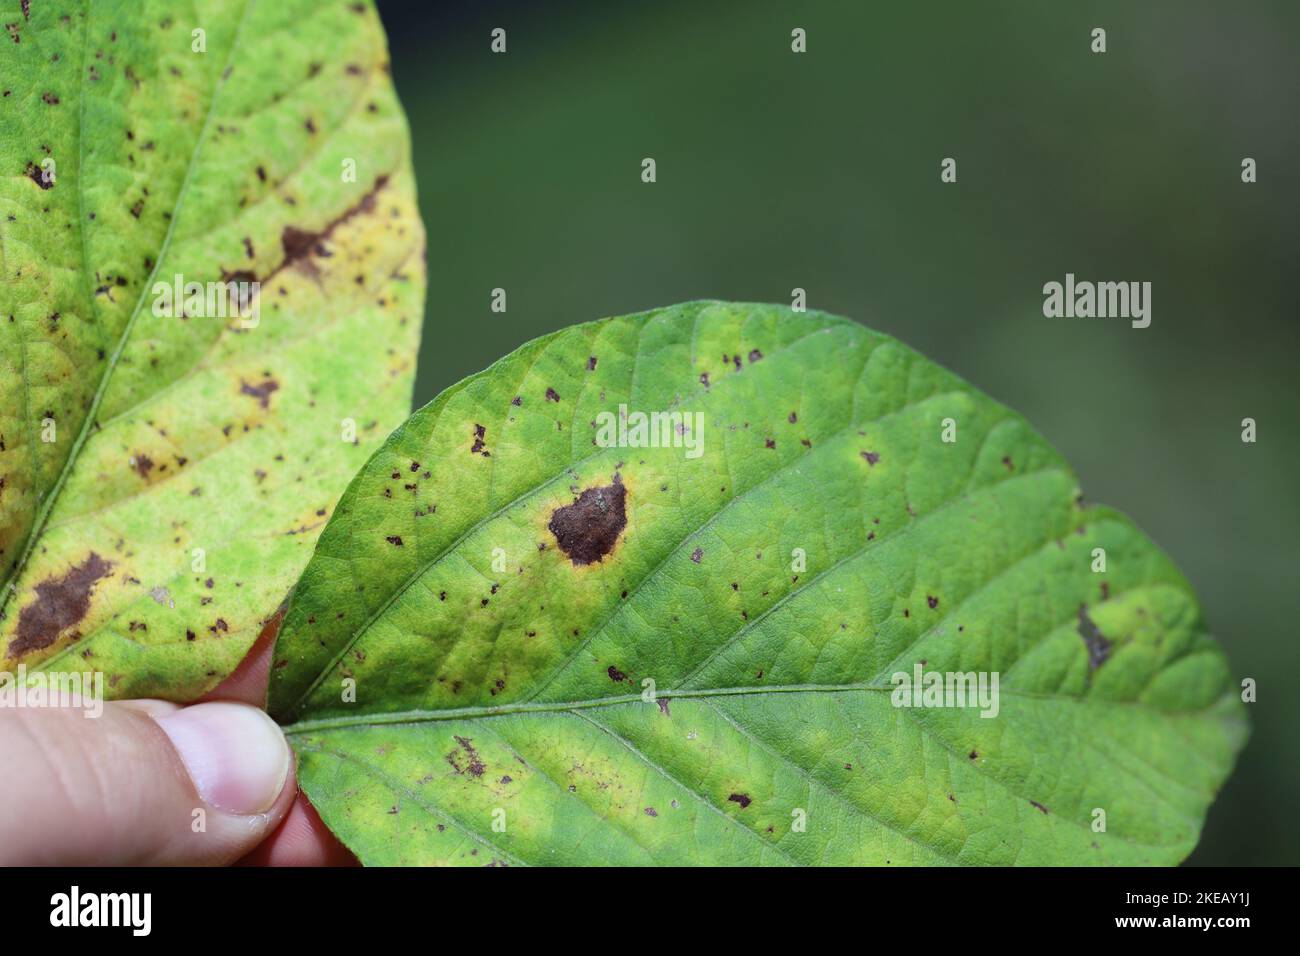 Frogeye leaf spot (Cercospora sojina) discreet circular lesions on soybean leaf. Stock Photo